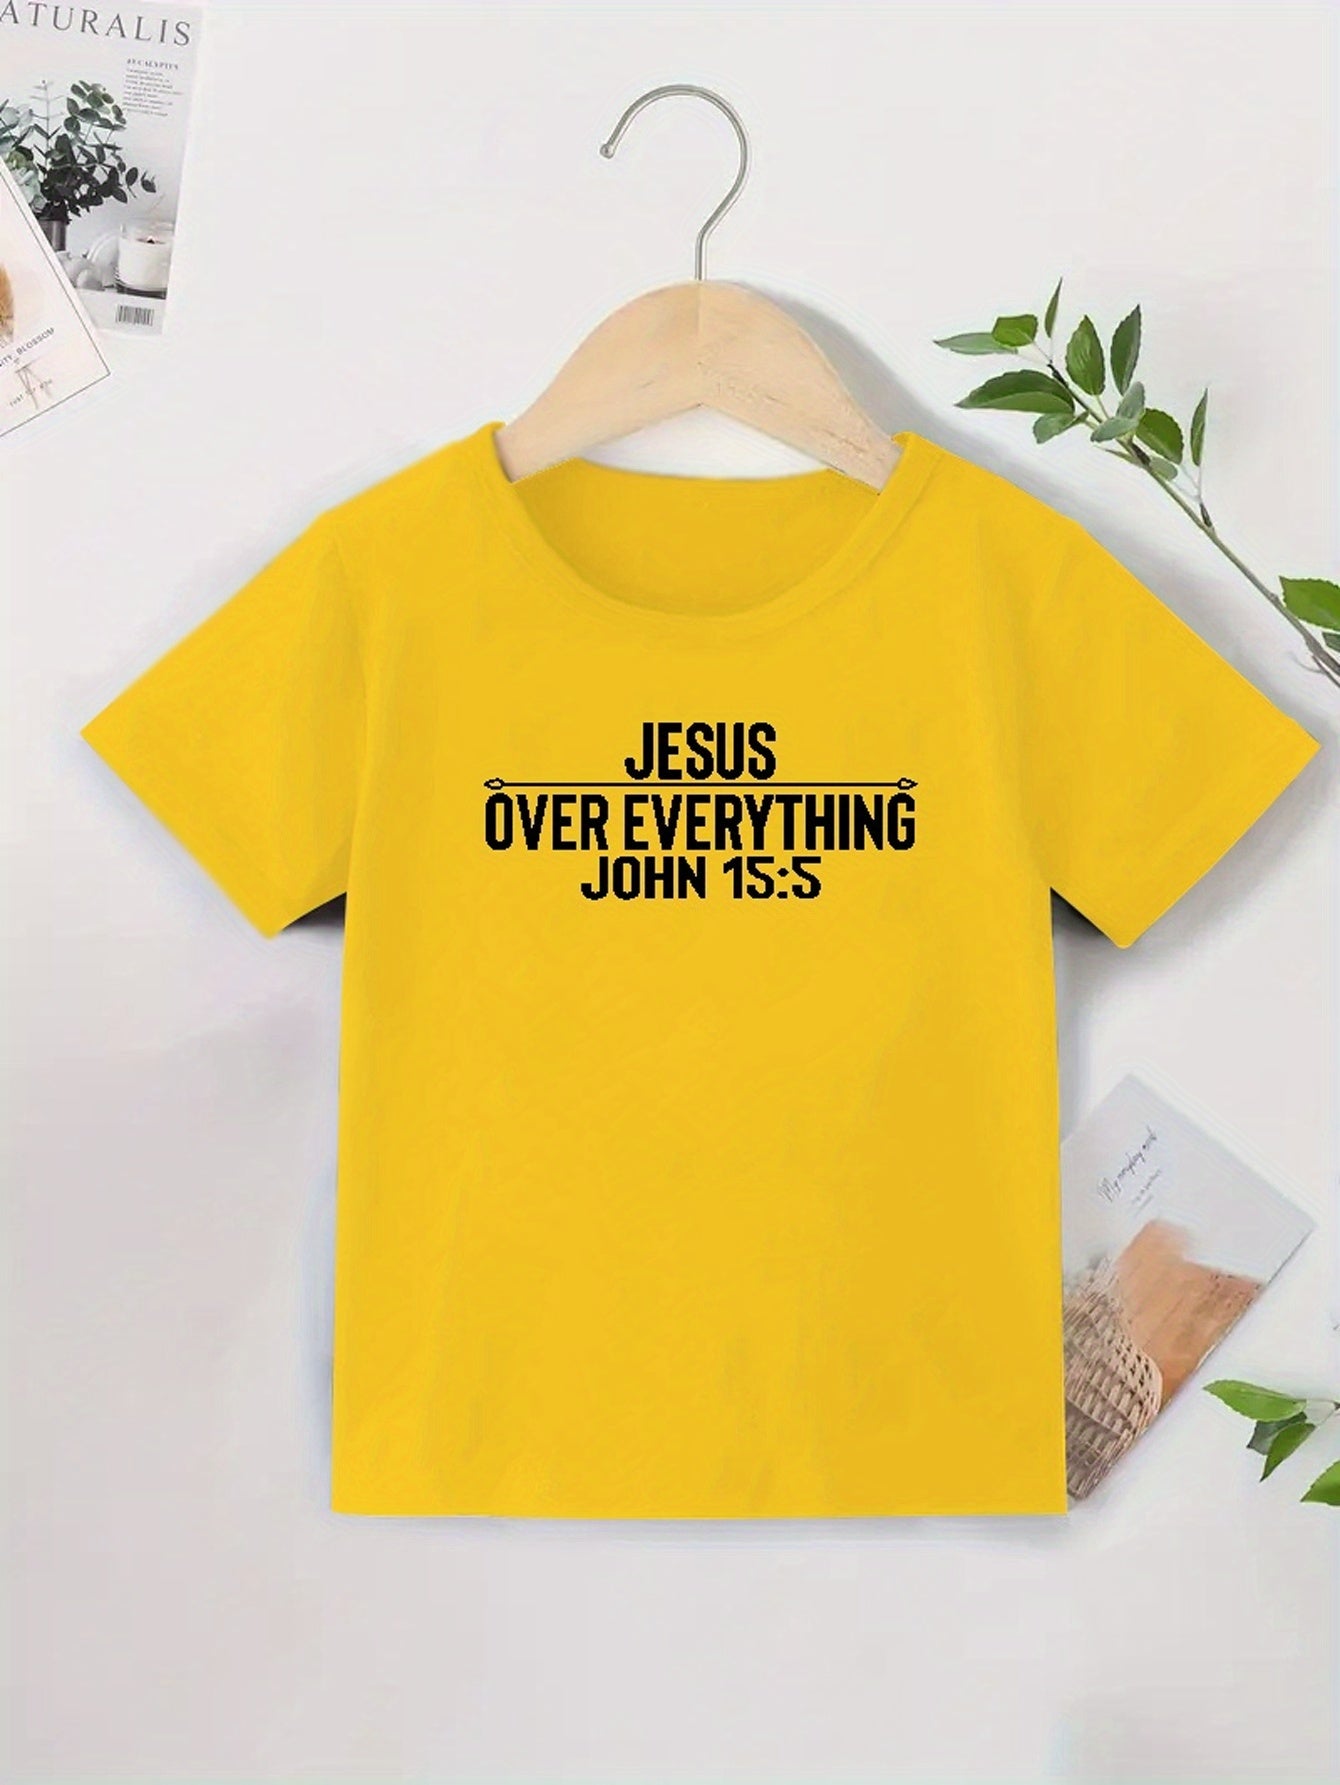 JESUS OVER EVERYTHING Youth Christian T-shirt claimedbygoddesigns